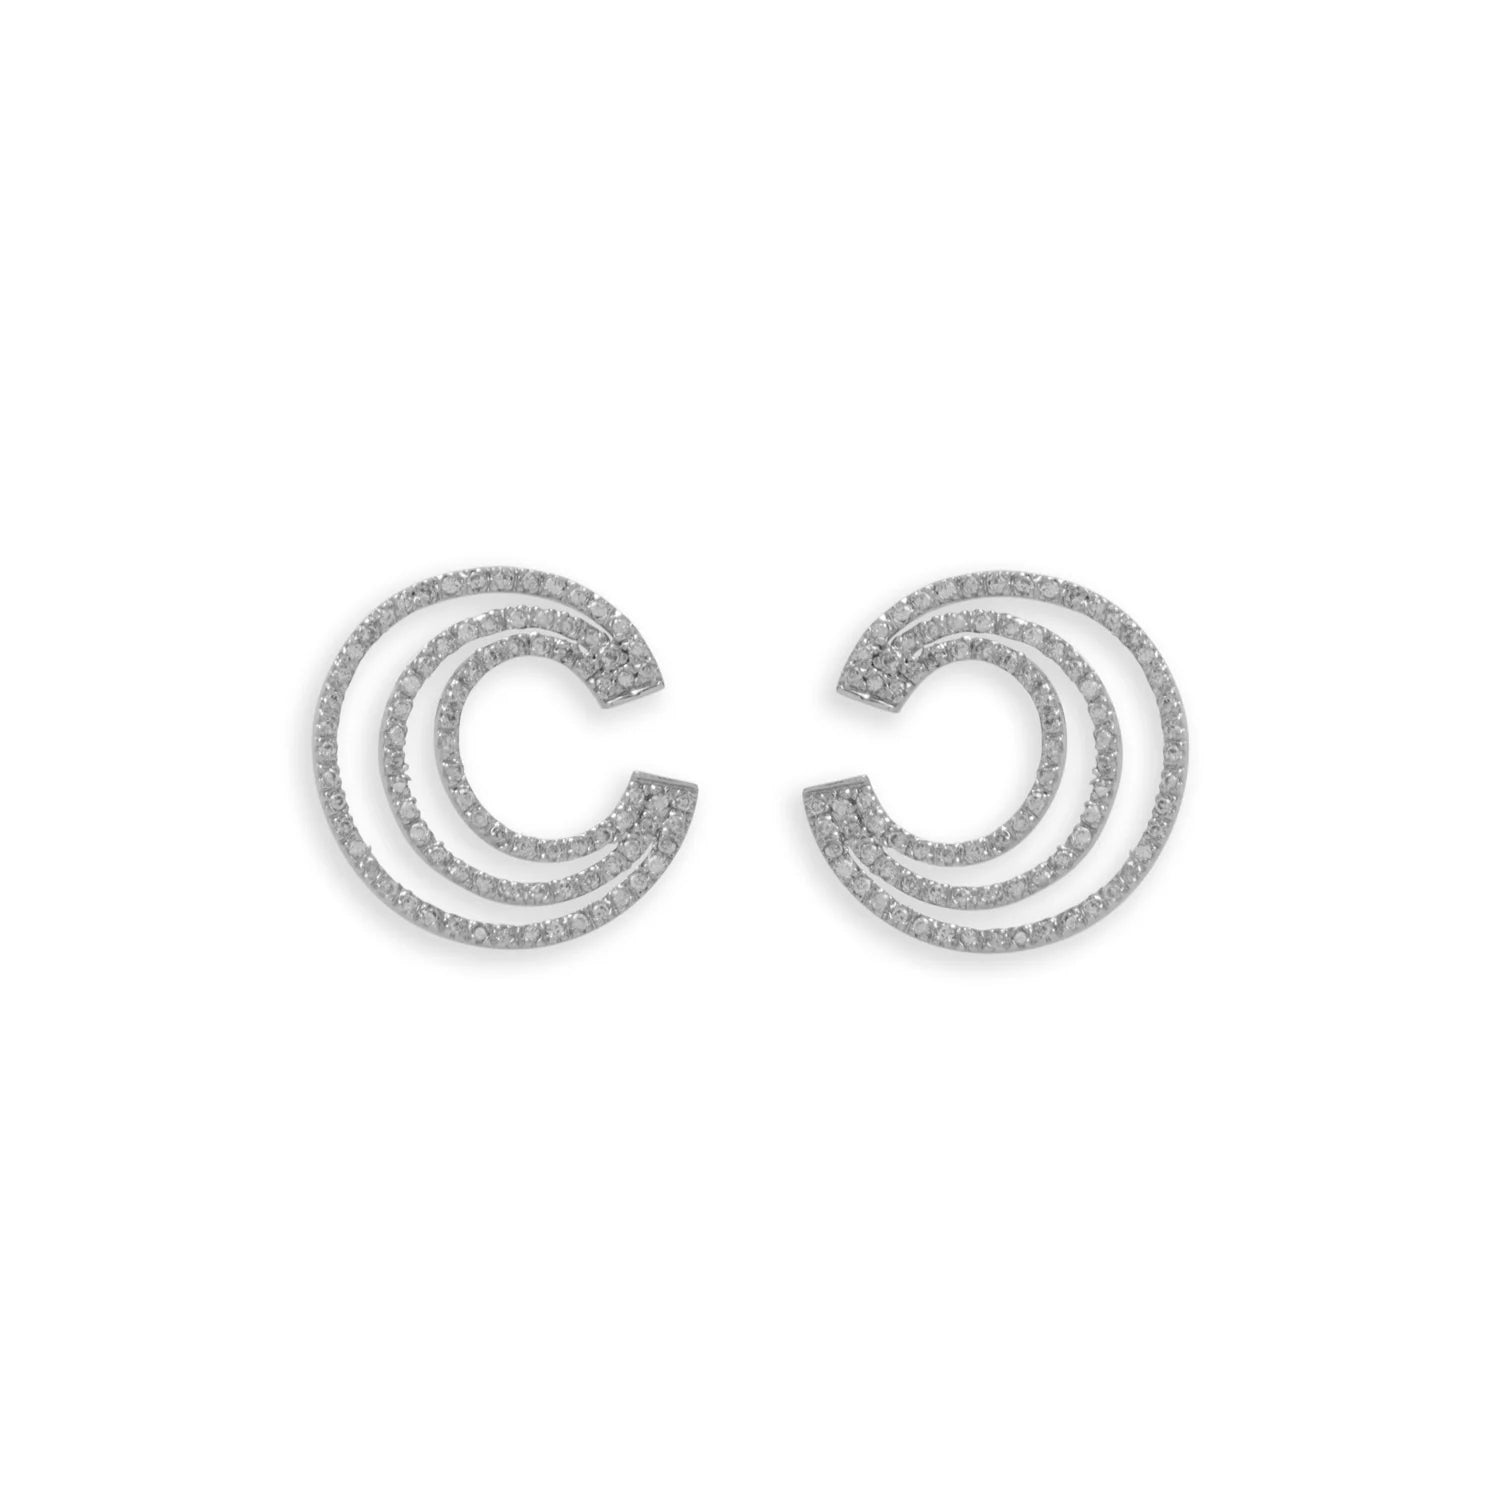 Silver Rhodium Plated Triple CZ Post Earrings- M H W ACCESSORIES - M H W ACCESSORIES LLC